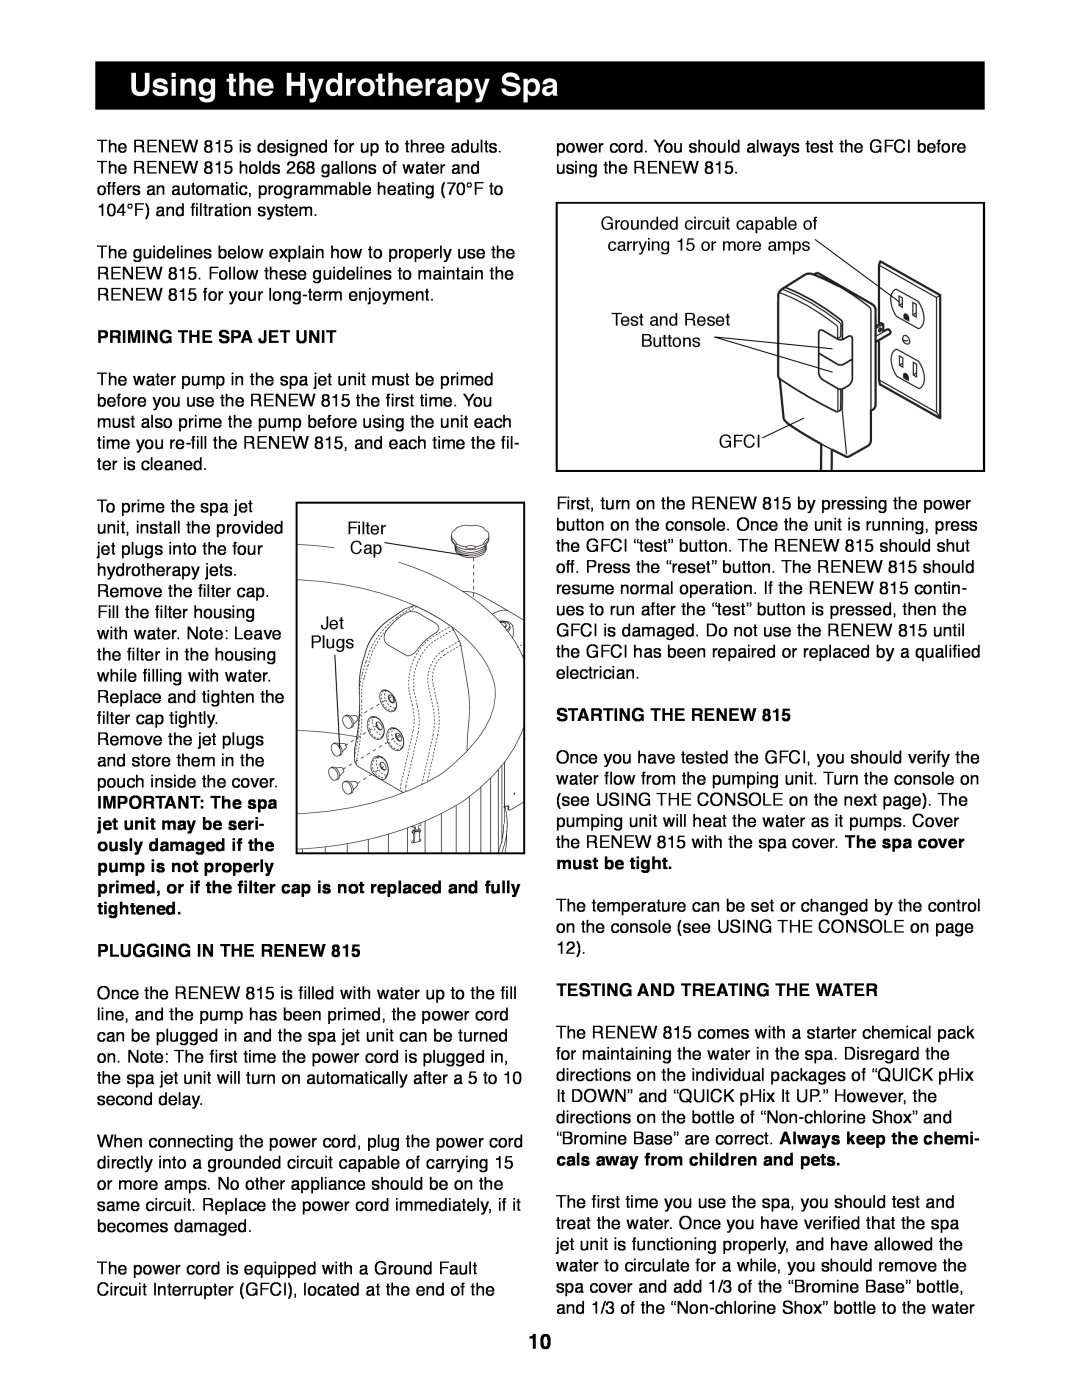 Image IMHS81590 manual Using the Hydrotherapy Spa, Priming The Spa Jet Unit, IMPORTANT The spa jet unit may be seri 